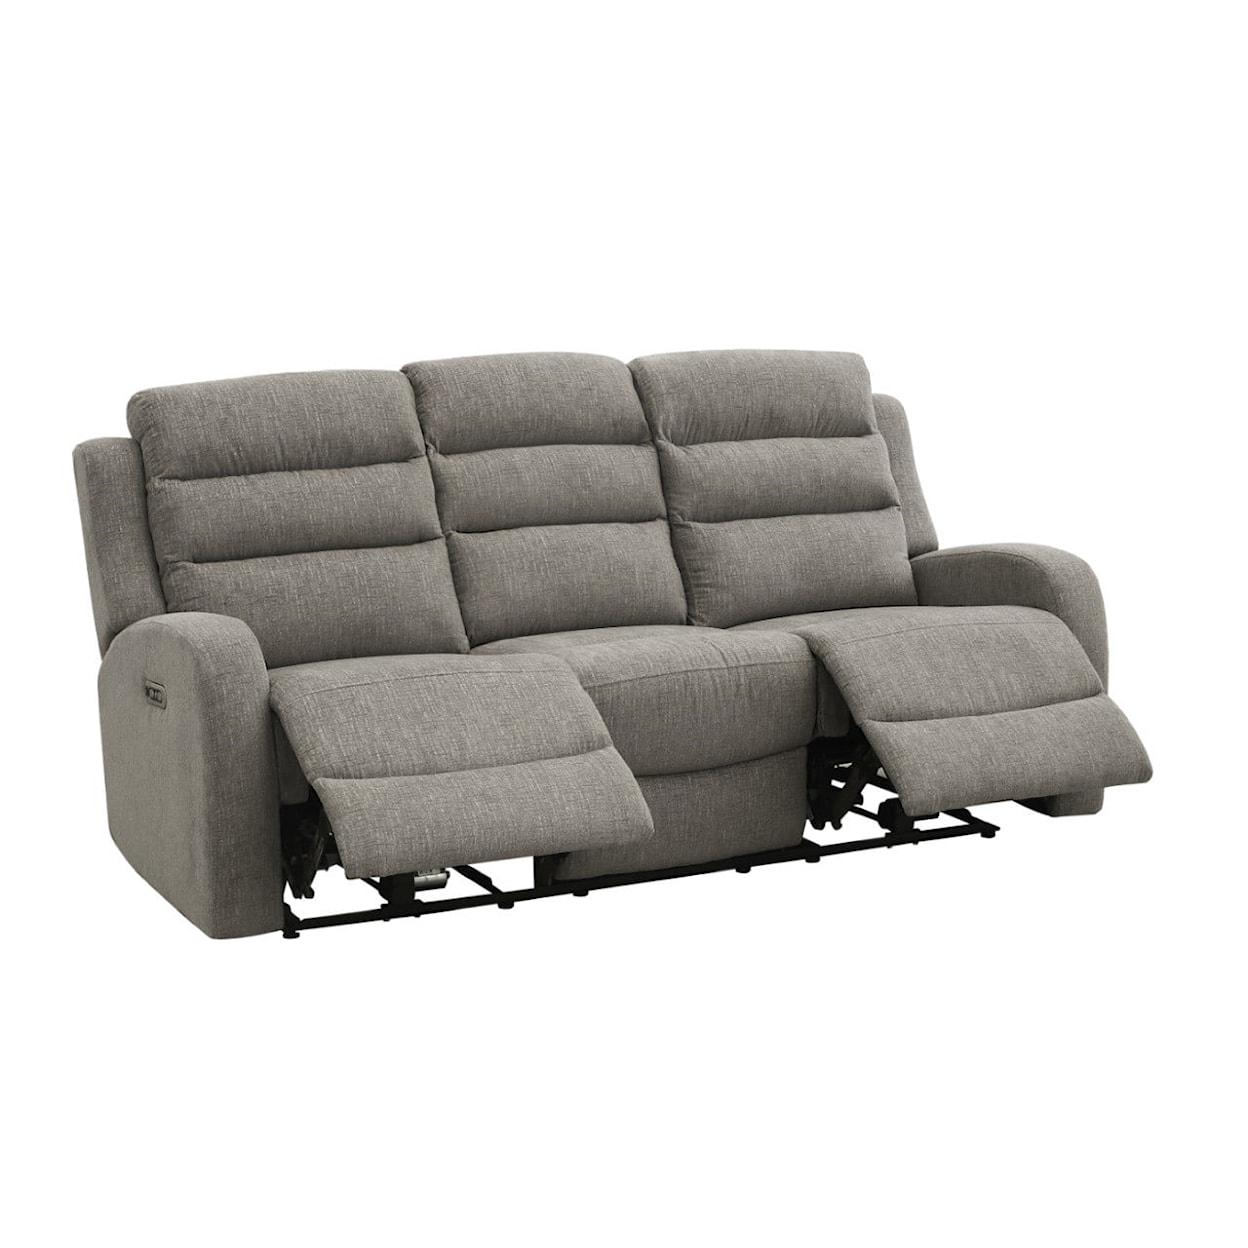 Elements International Avanti Power Headrest Reclining Sofa